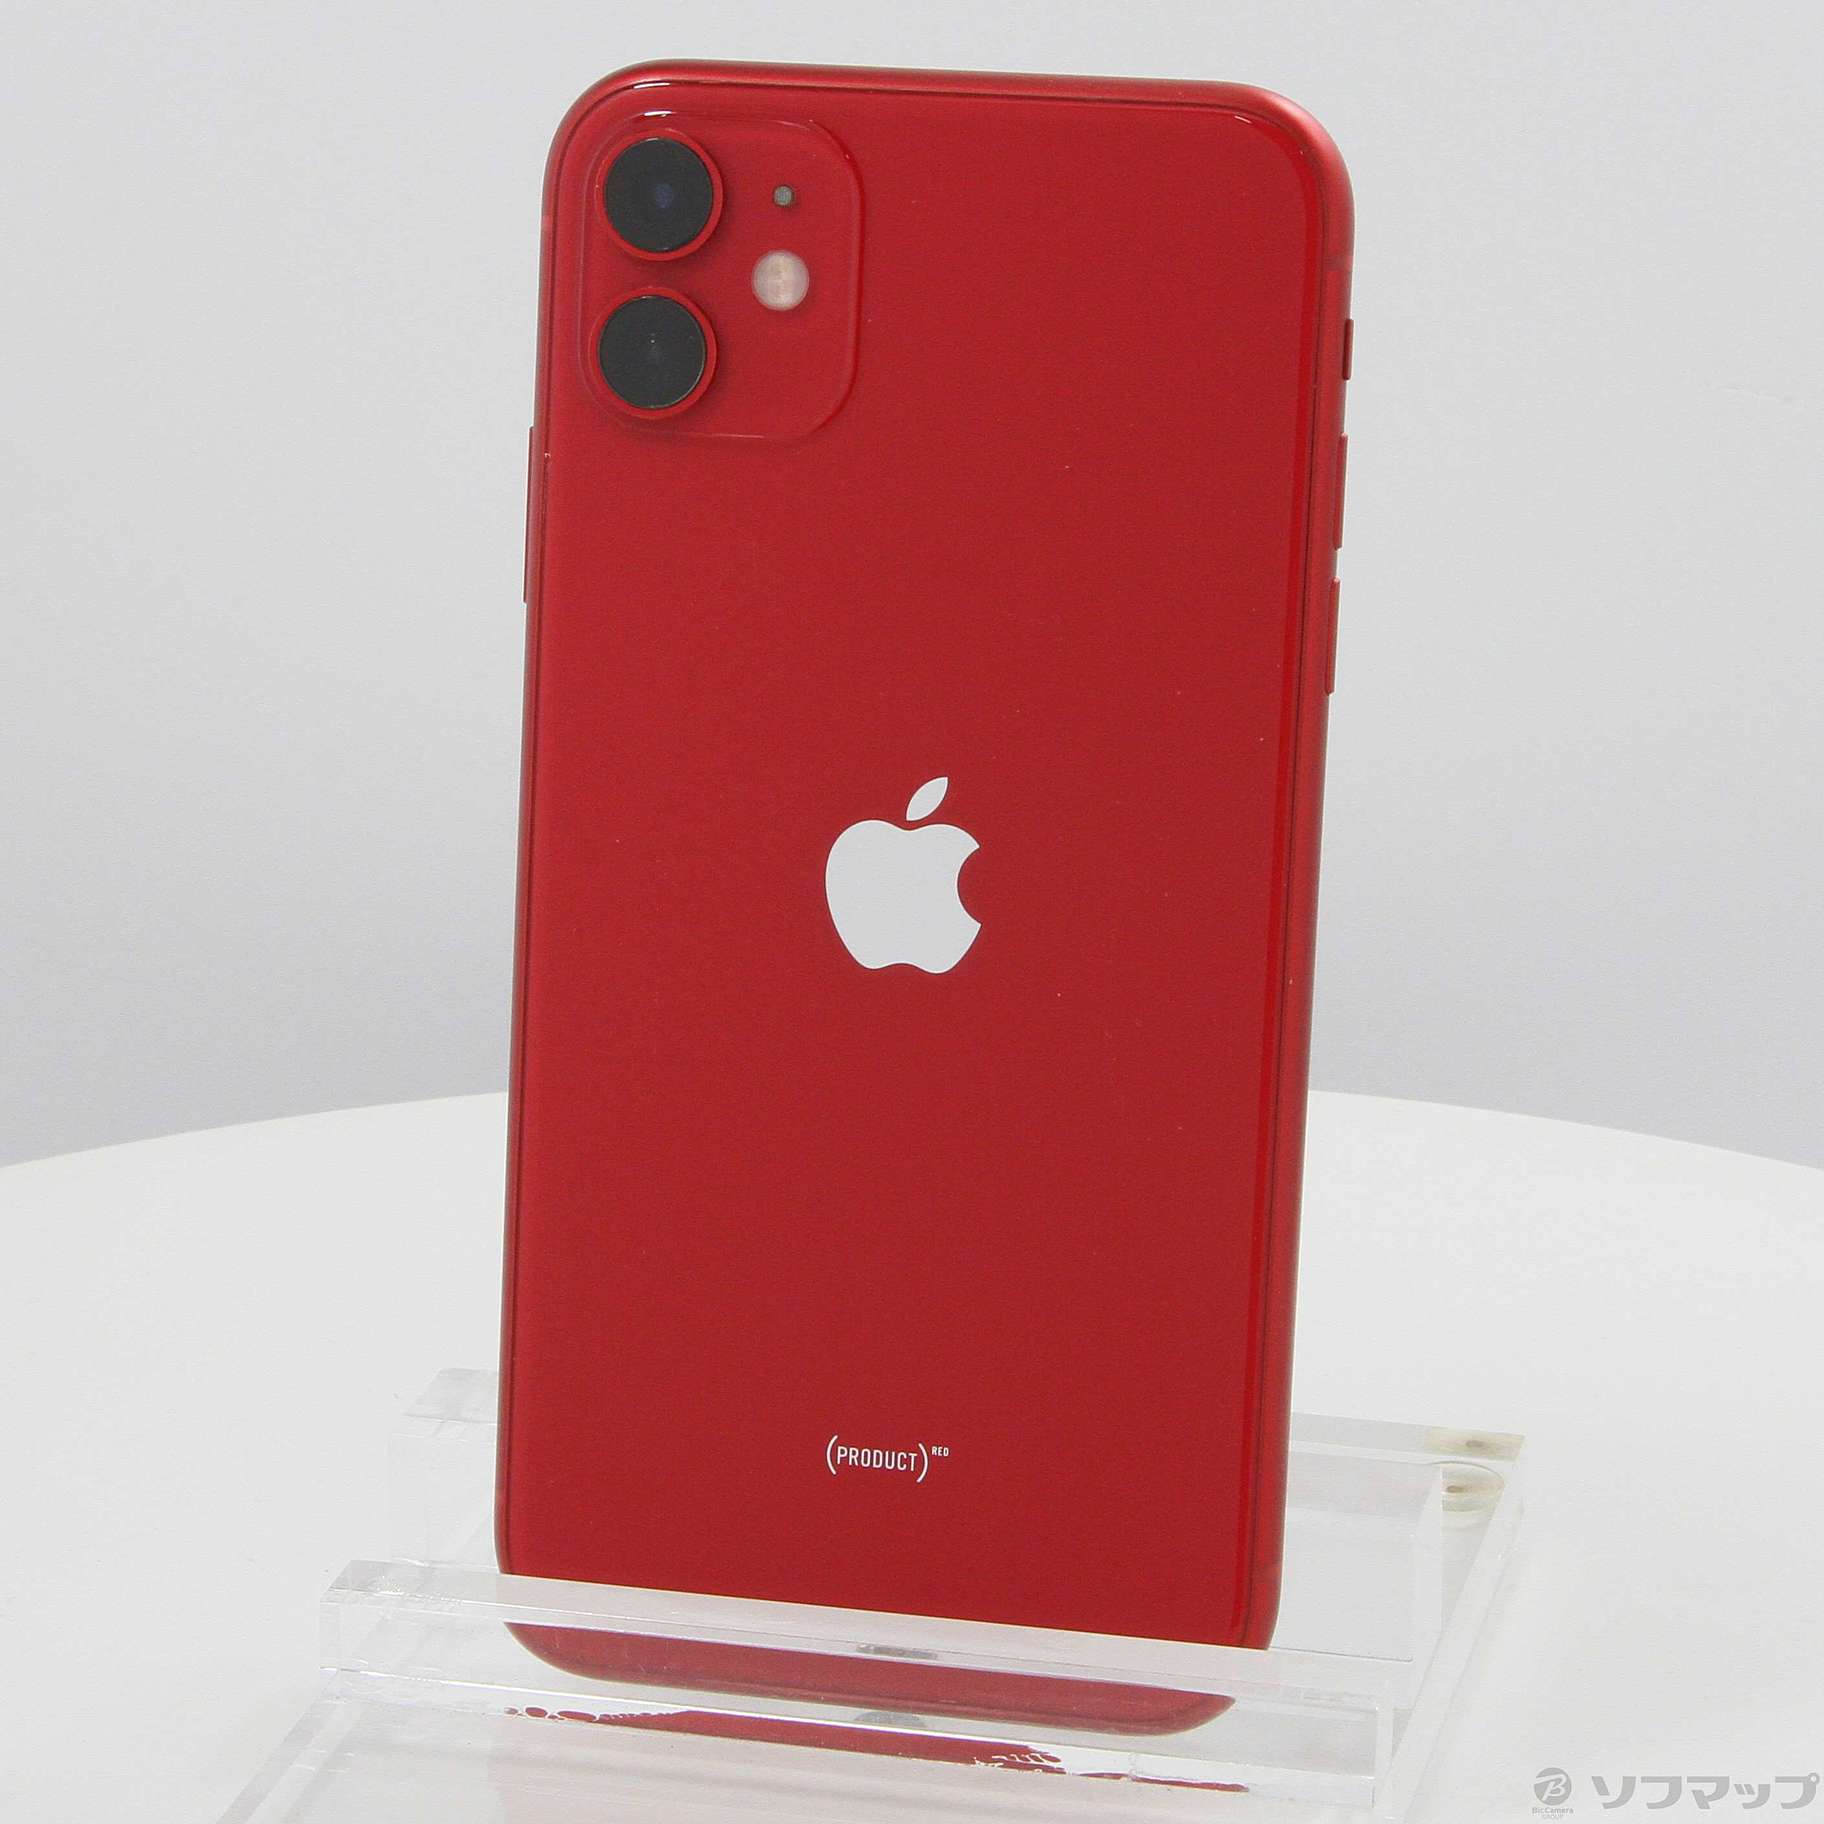 iPhone 11 (PRODUCT)RED 64 GB Softbank - スマートフォン本体